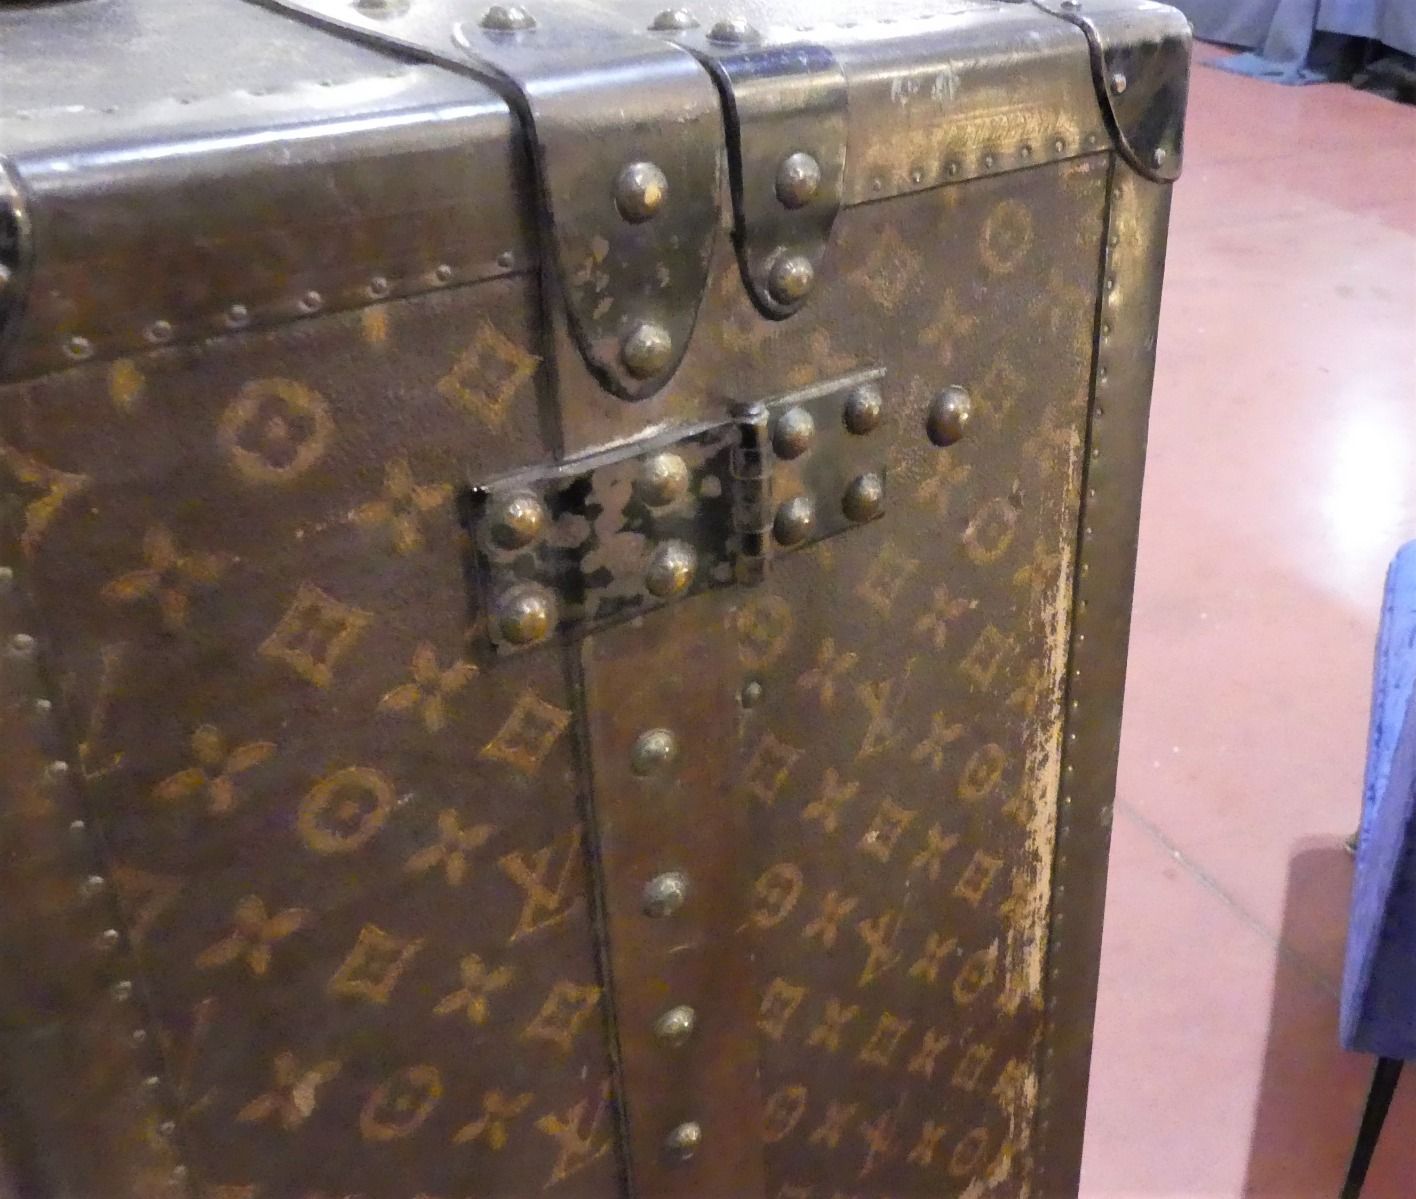 Louis Vuitton 1920s wardrobe trunk